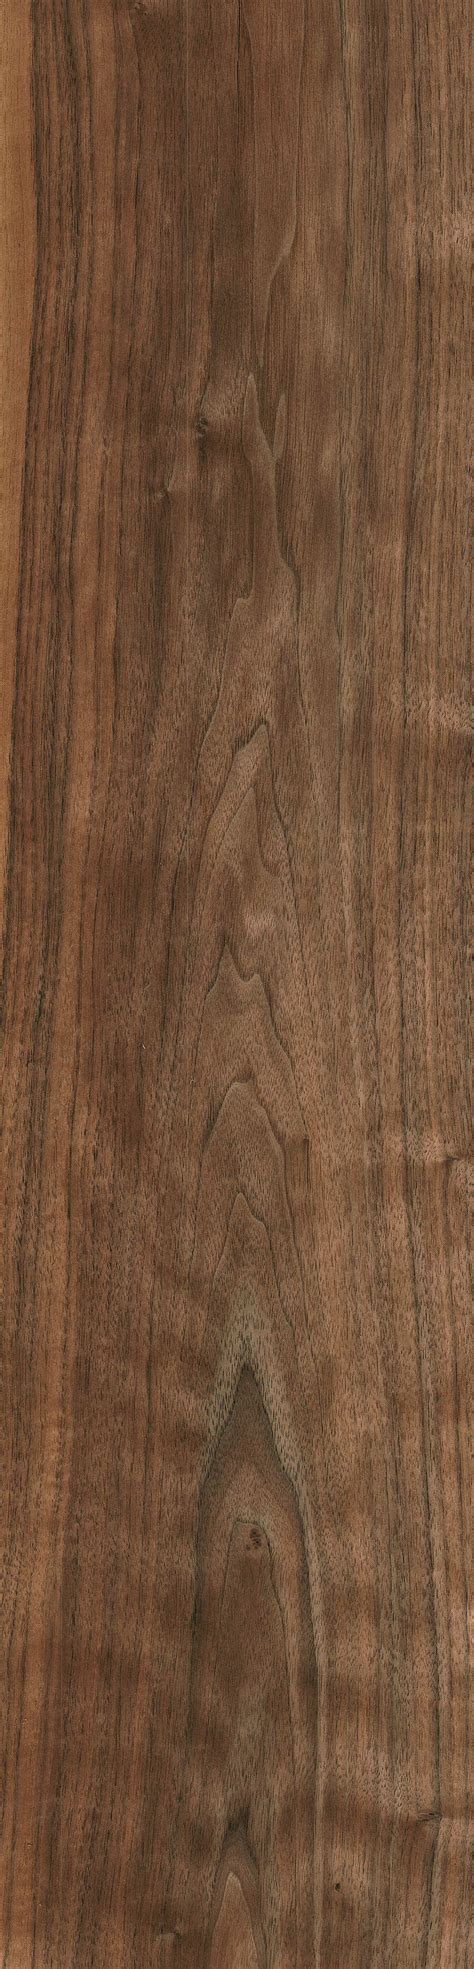 black walnut  wood  lumber identification hardwood